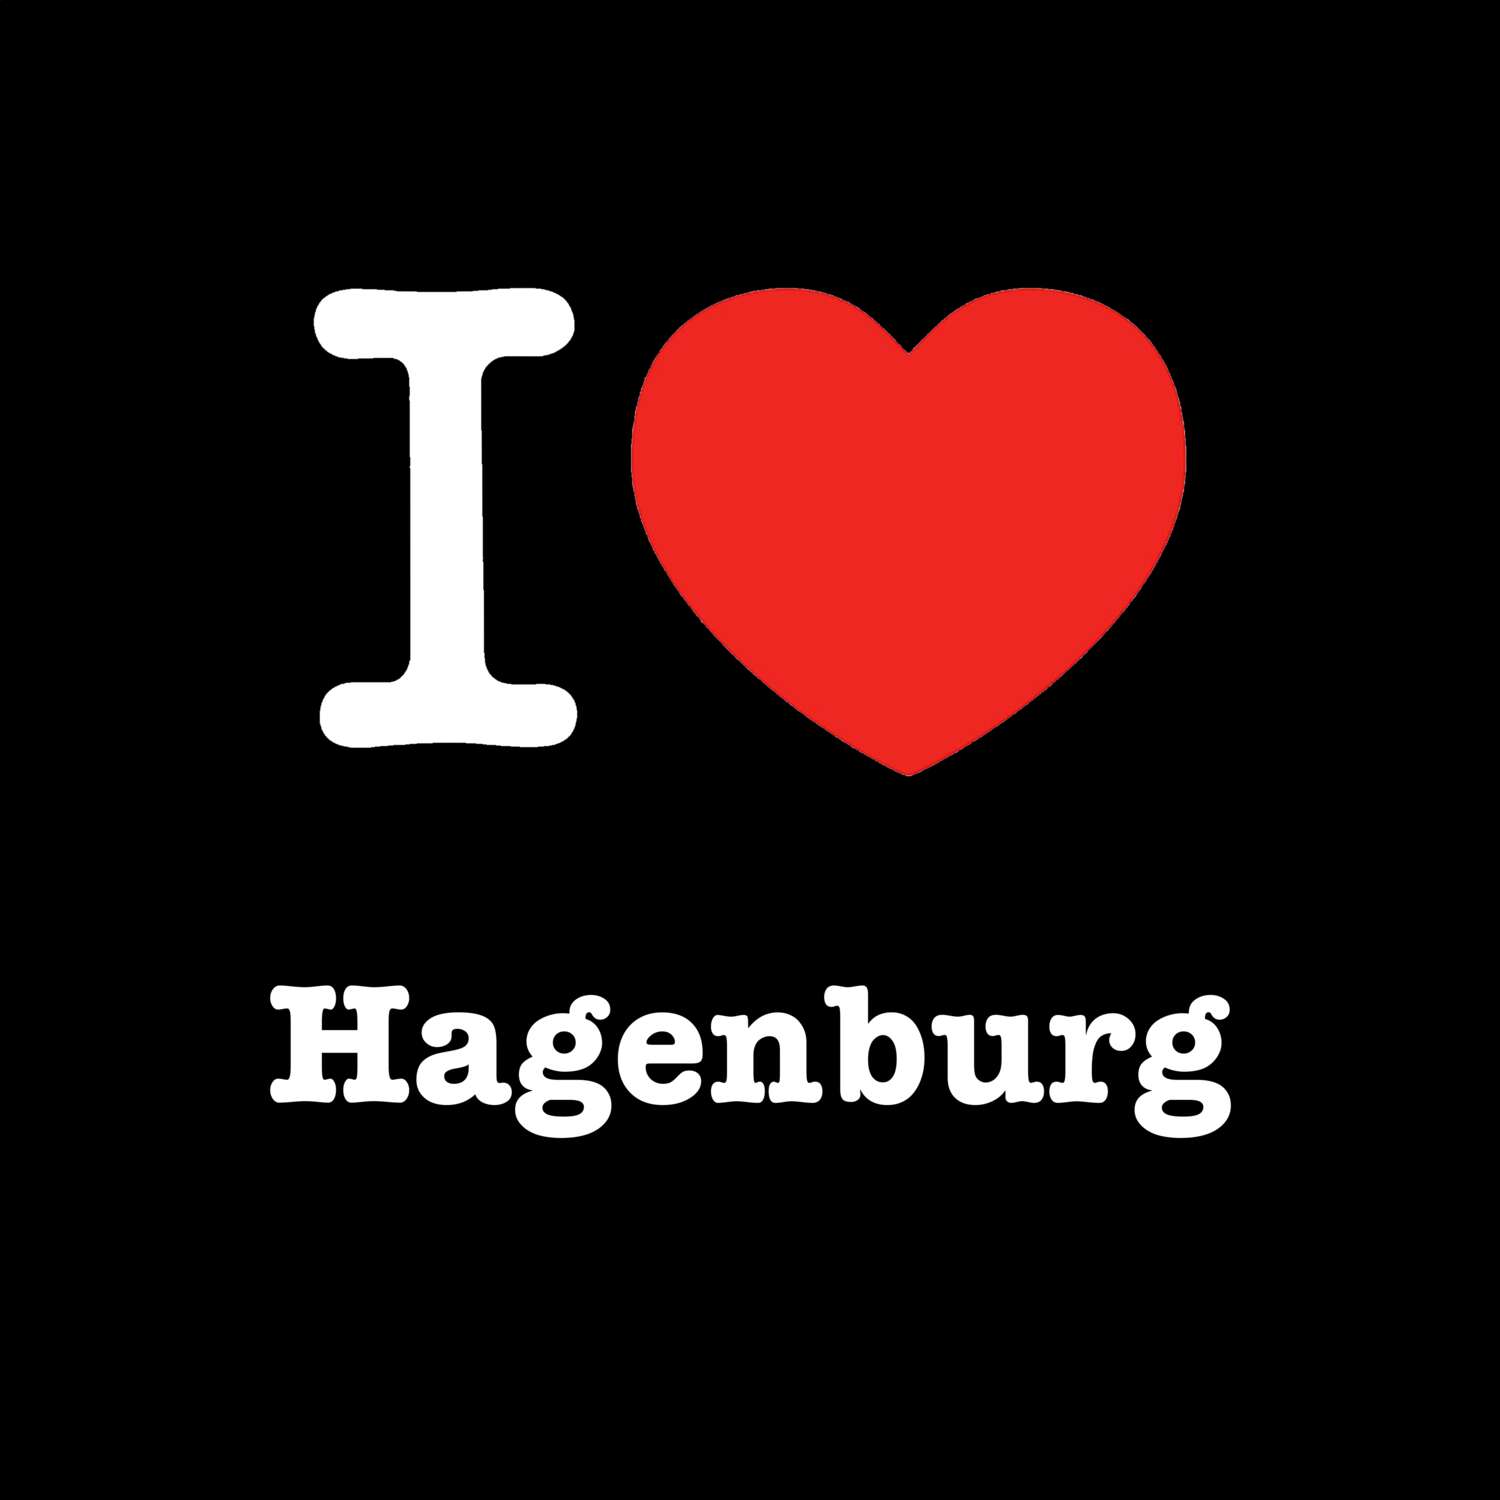 Hagenburg T-Shirt »I love«